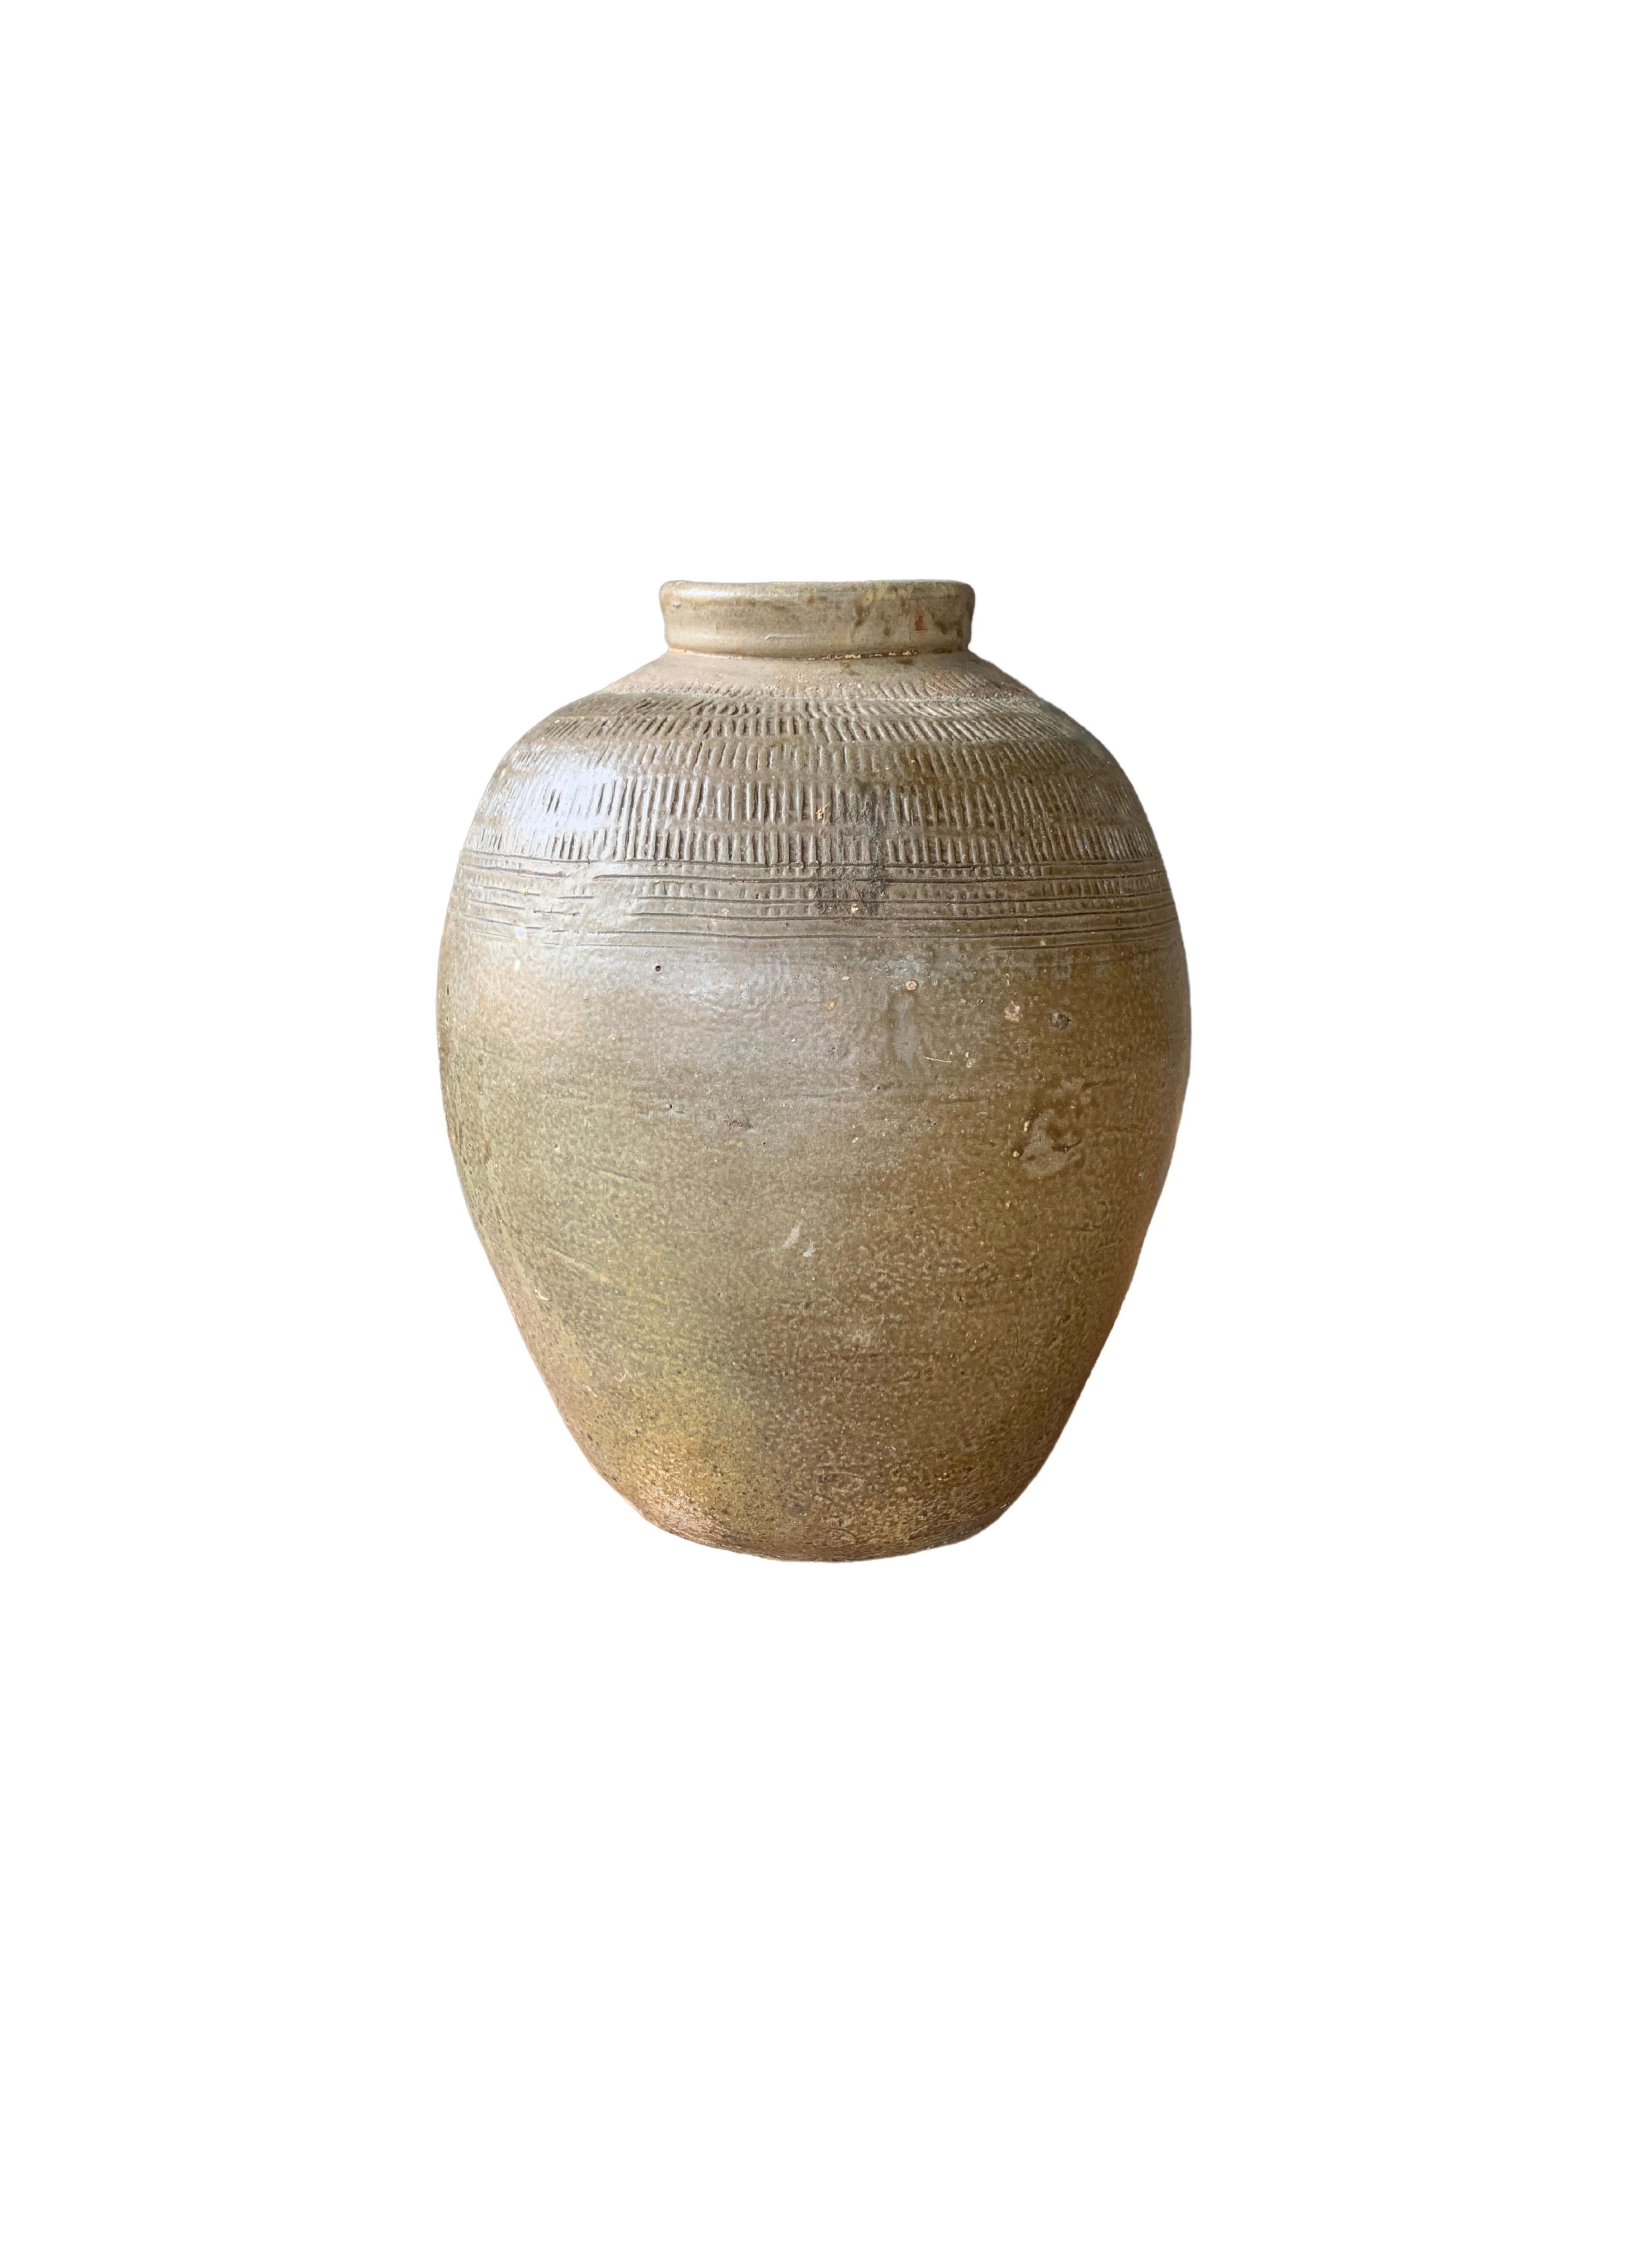 Glazed Antique Chinese Ceramic Pickling Jar Jade Green, c. 1900 For Sale